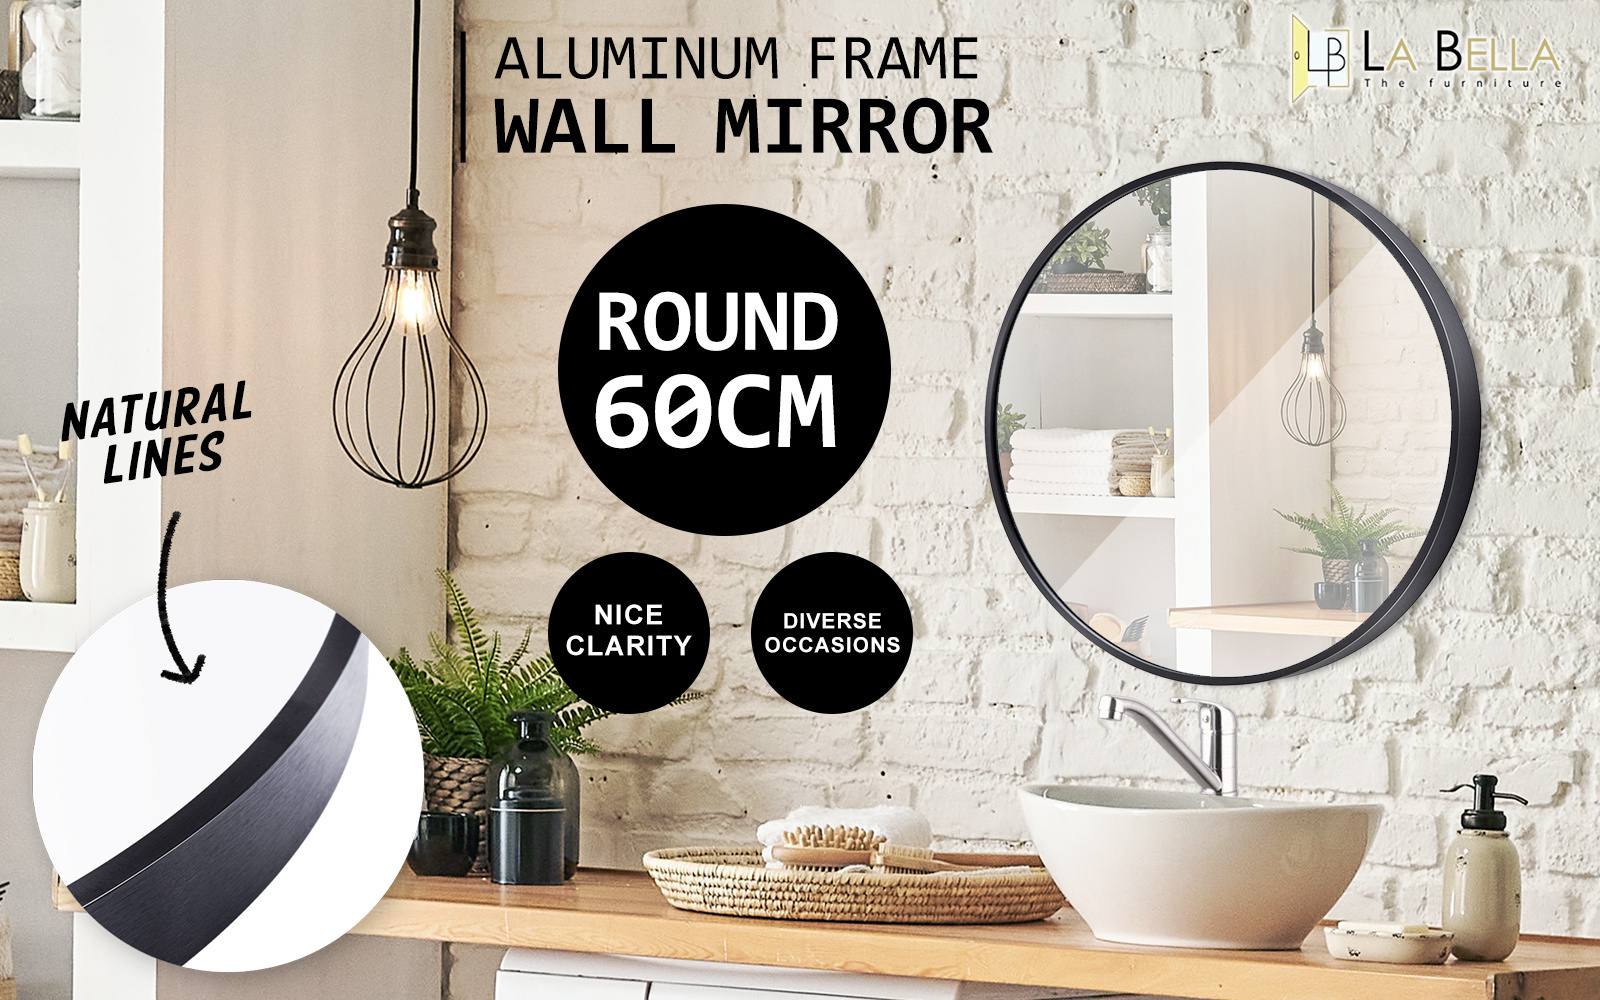 2 Set Black Wall Mirror Round Aluminum Frame Makeup Decor Bathroom Vanity 60cm